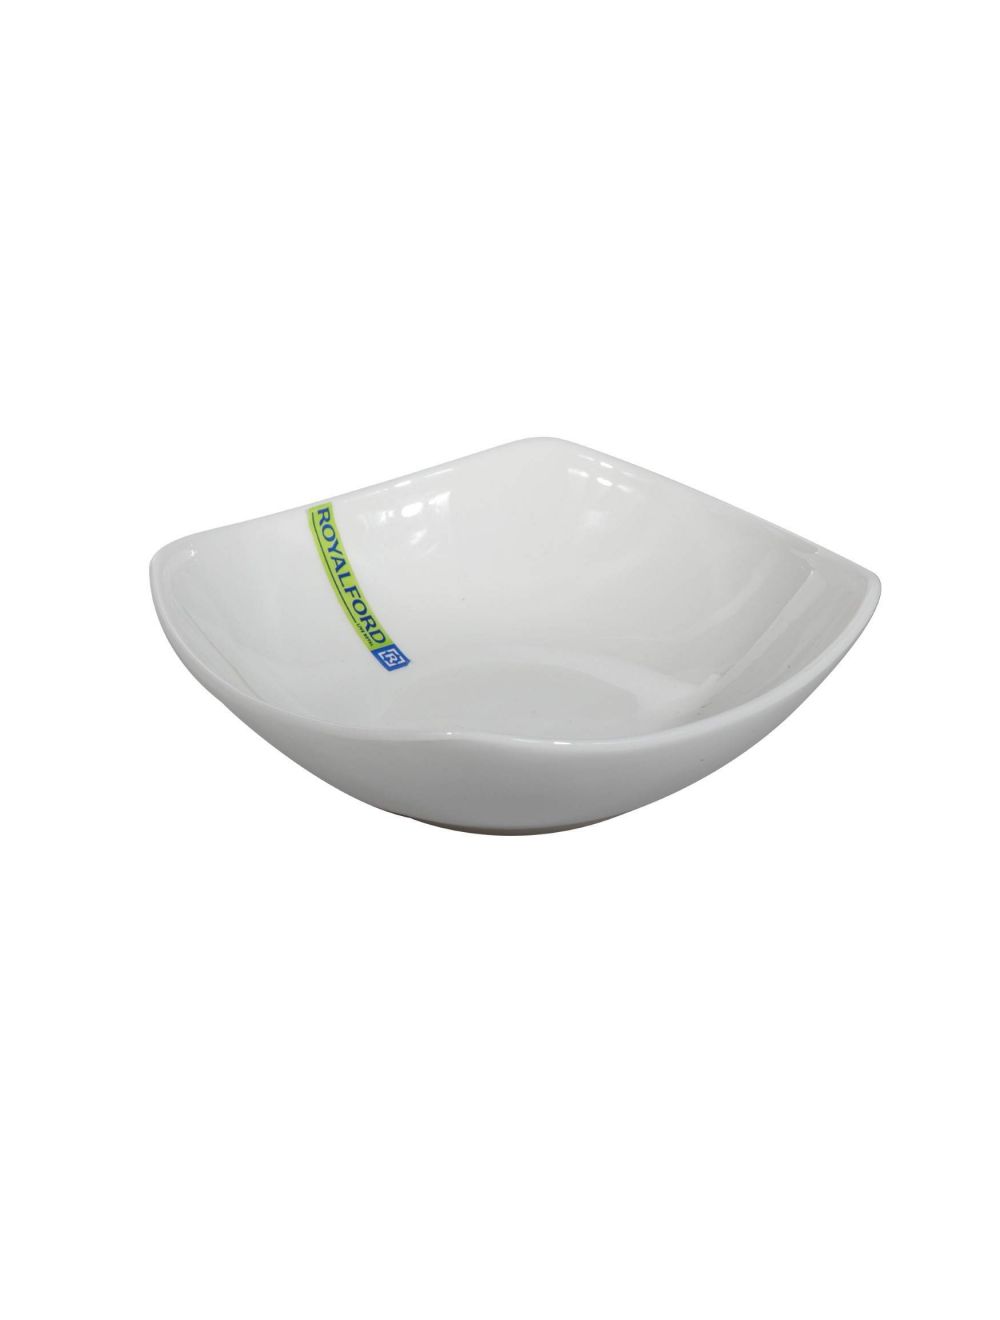 Royalford RF9256 Porcelainware Magnesia 6.75 Inch Square Bowl